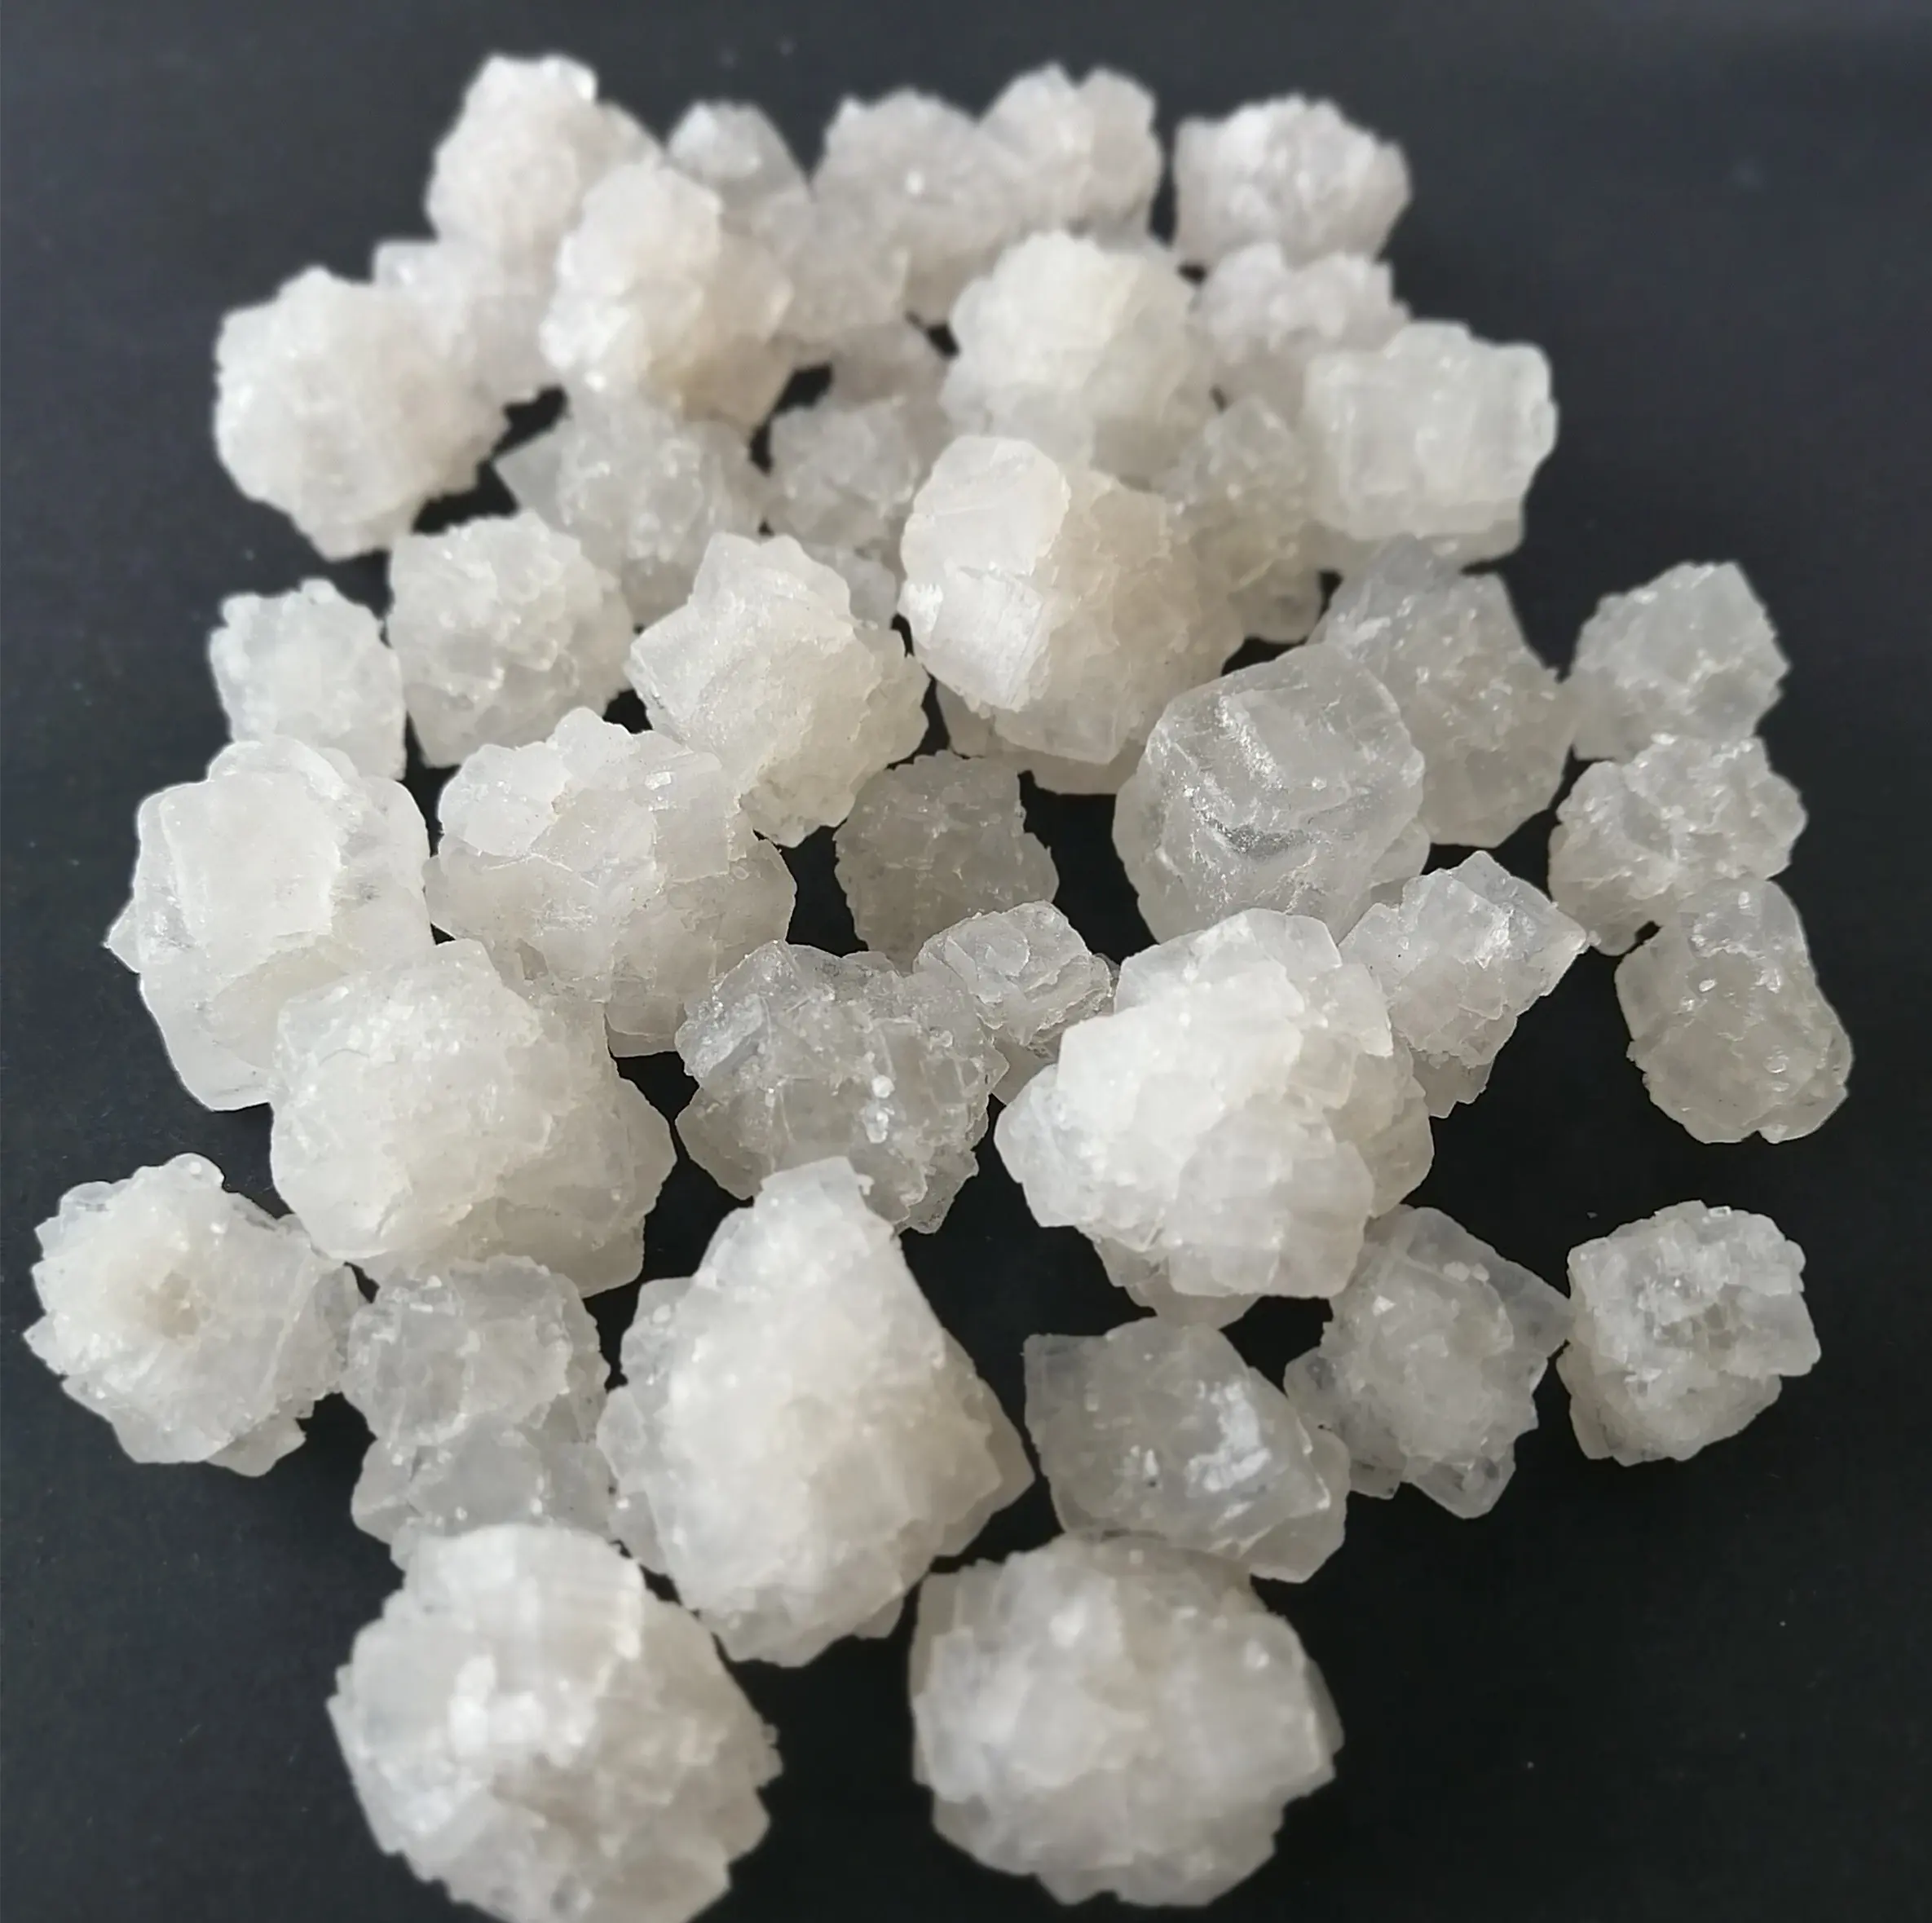 Best Cif Price For Raw Salt NaCl Cif Price Sodium Chloride CAS NO.7647-14-5